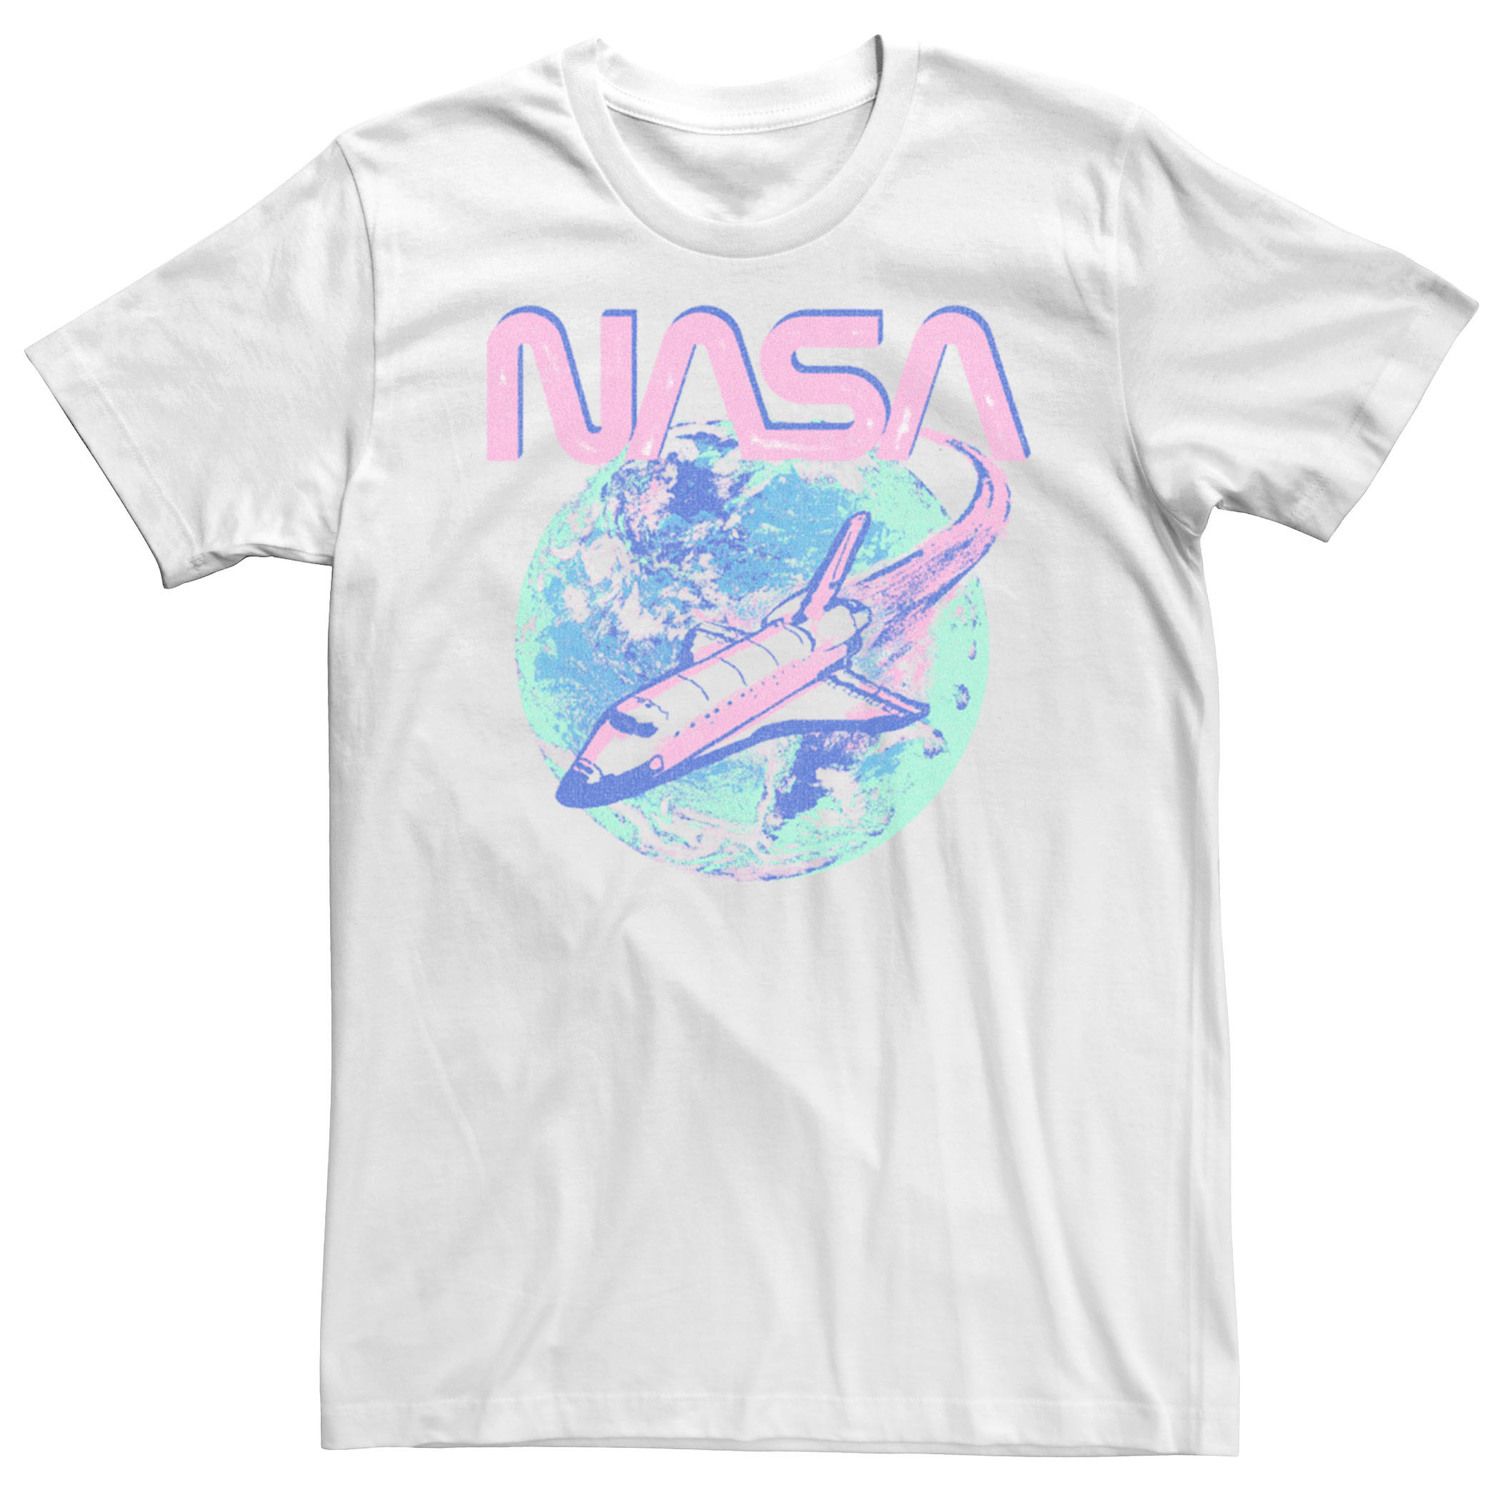 Image for Licensed Character Men's NASA Pastel Rocket Earth Logo Tee at Kohl's.